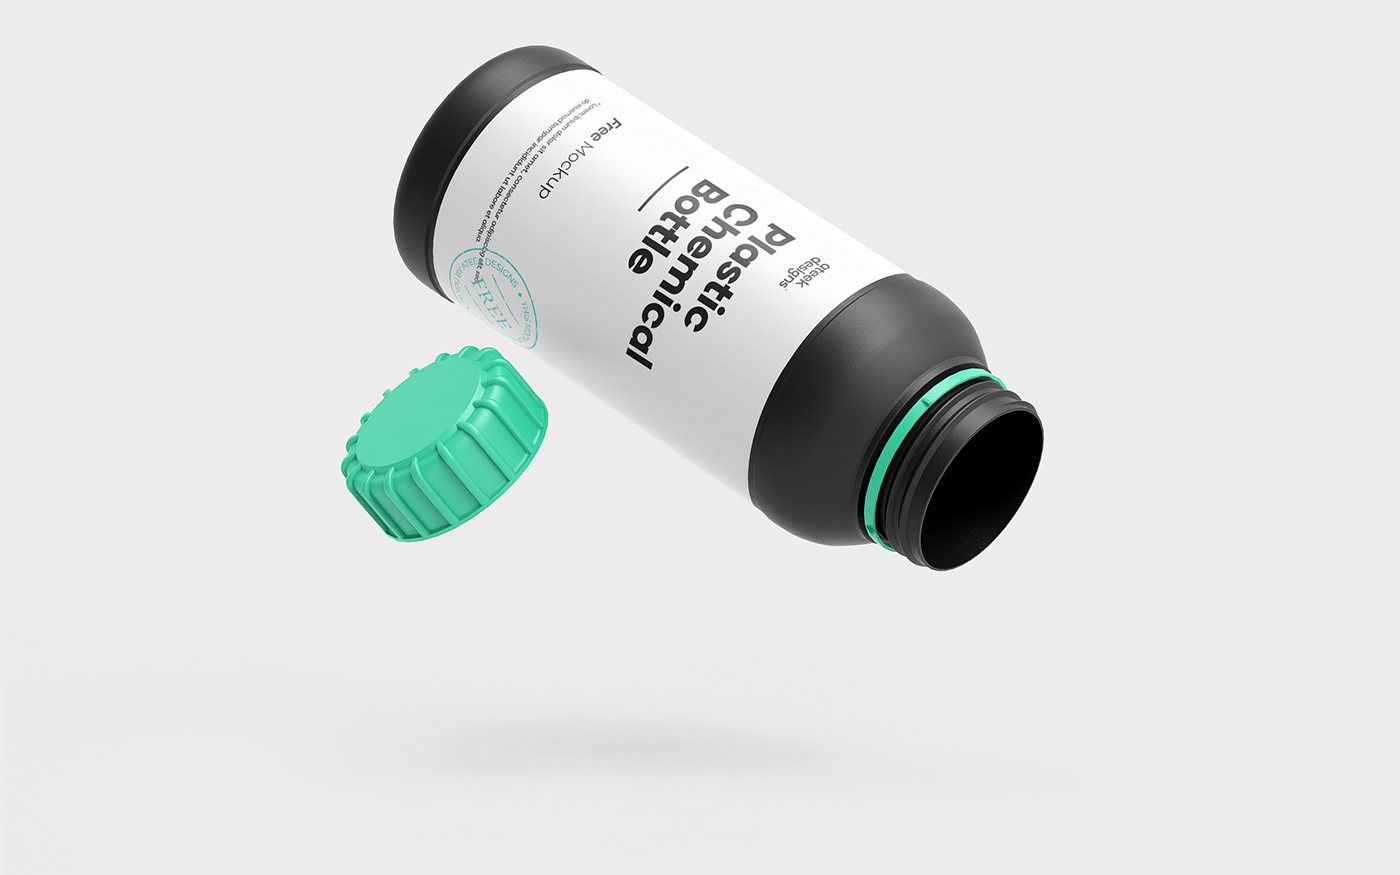 free mockup  Mockup bottle chemical 3d product plastic floating label design Packaging identity